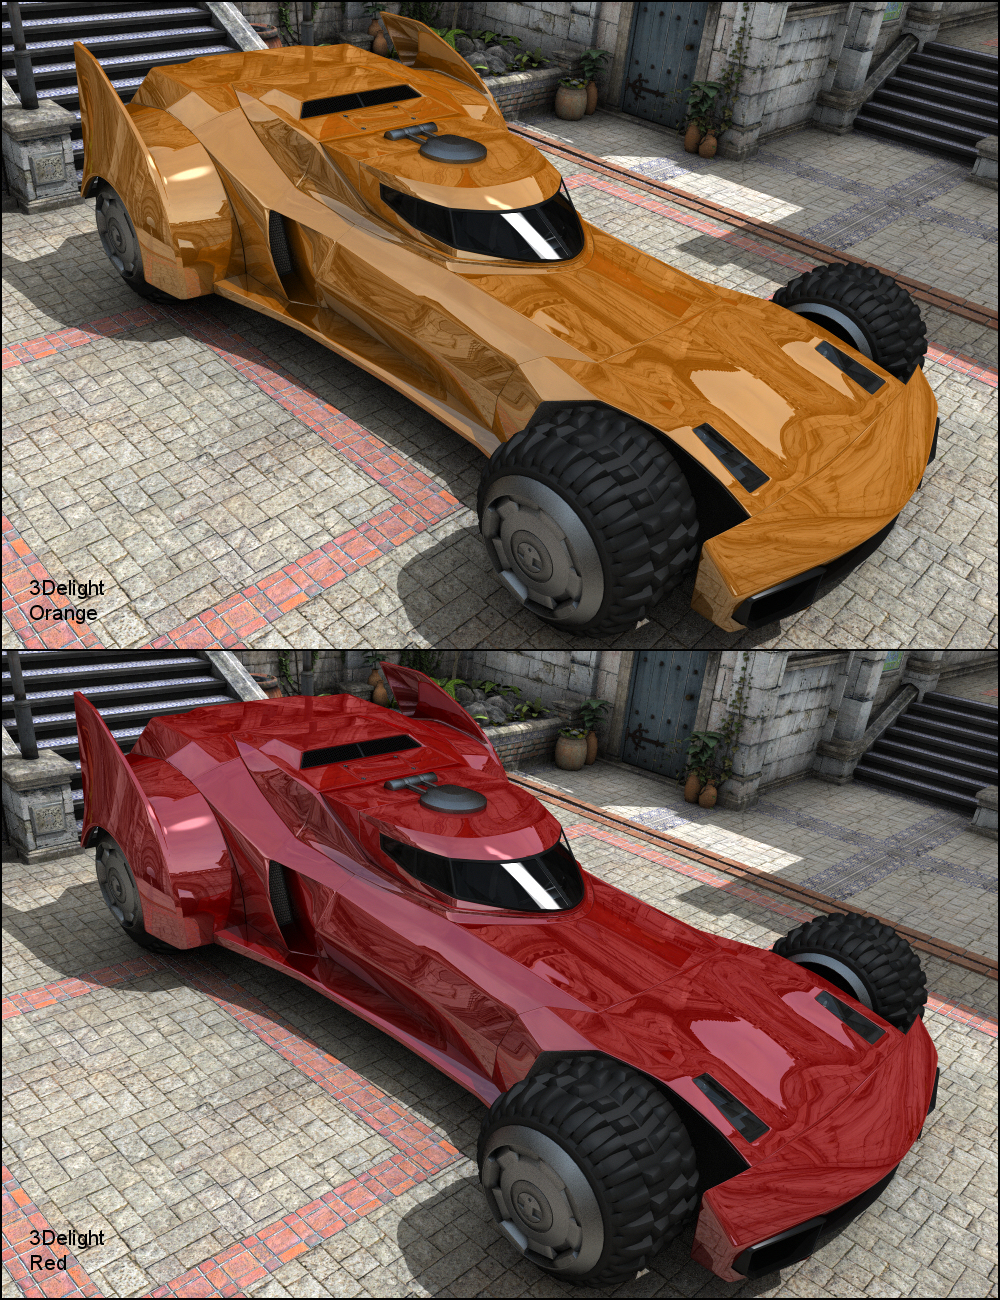 The Super Hero's Car by: Mattymanx, 3D Models by Daz 3D